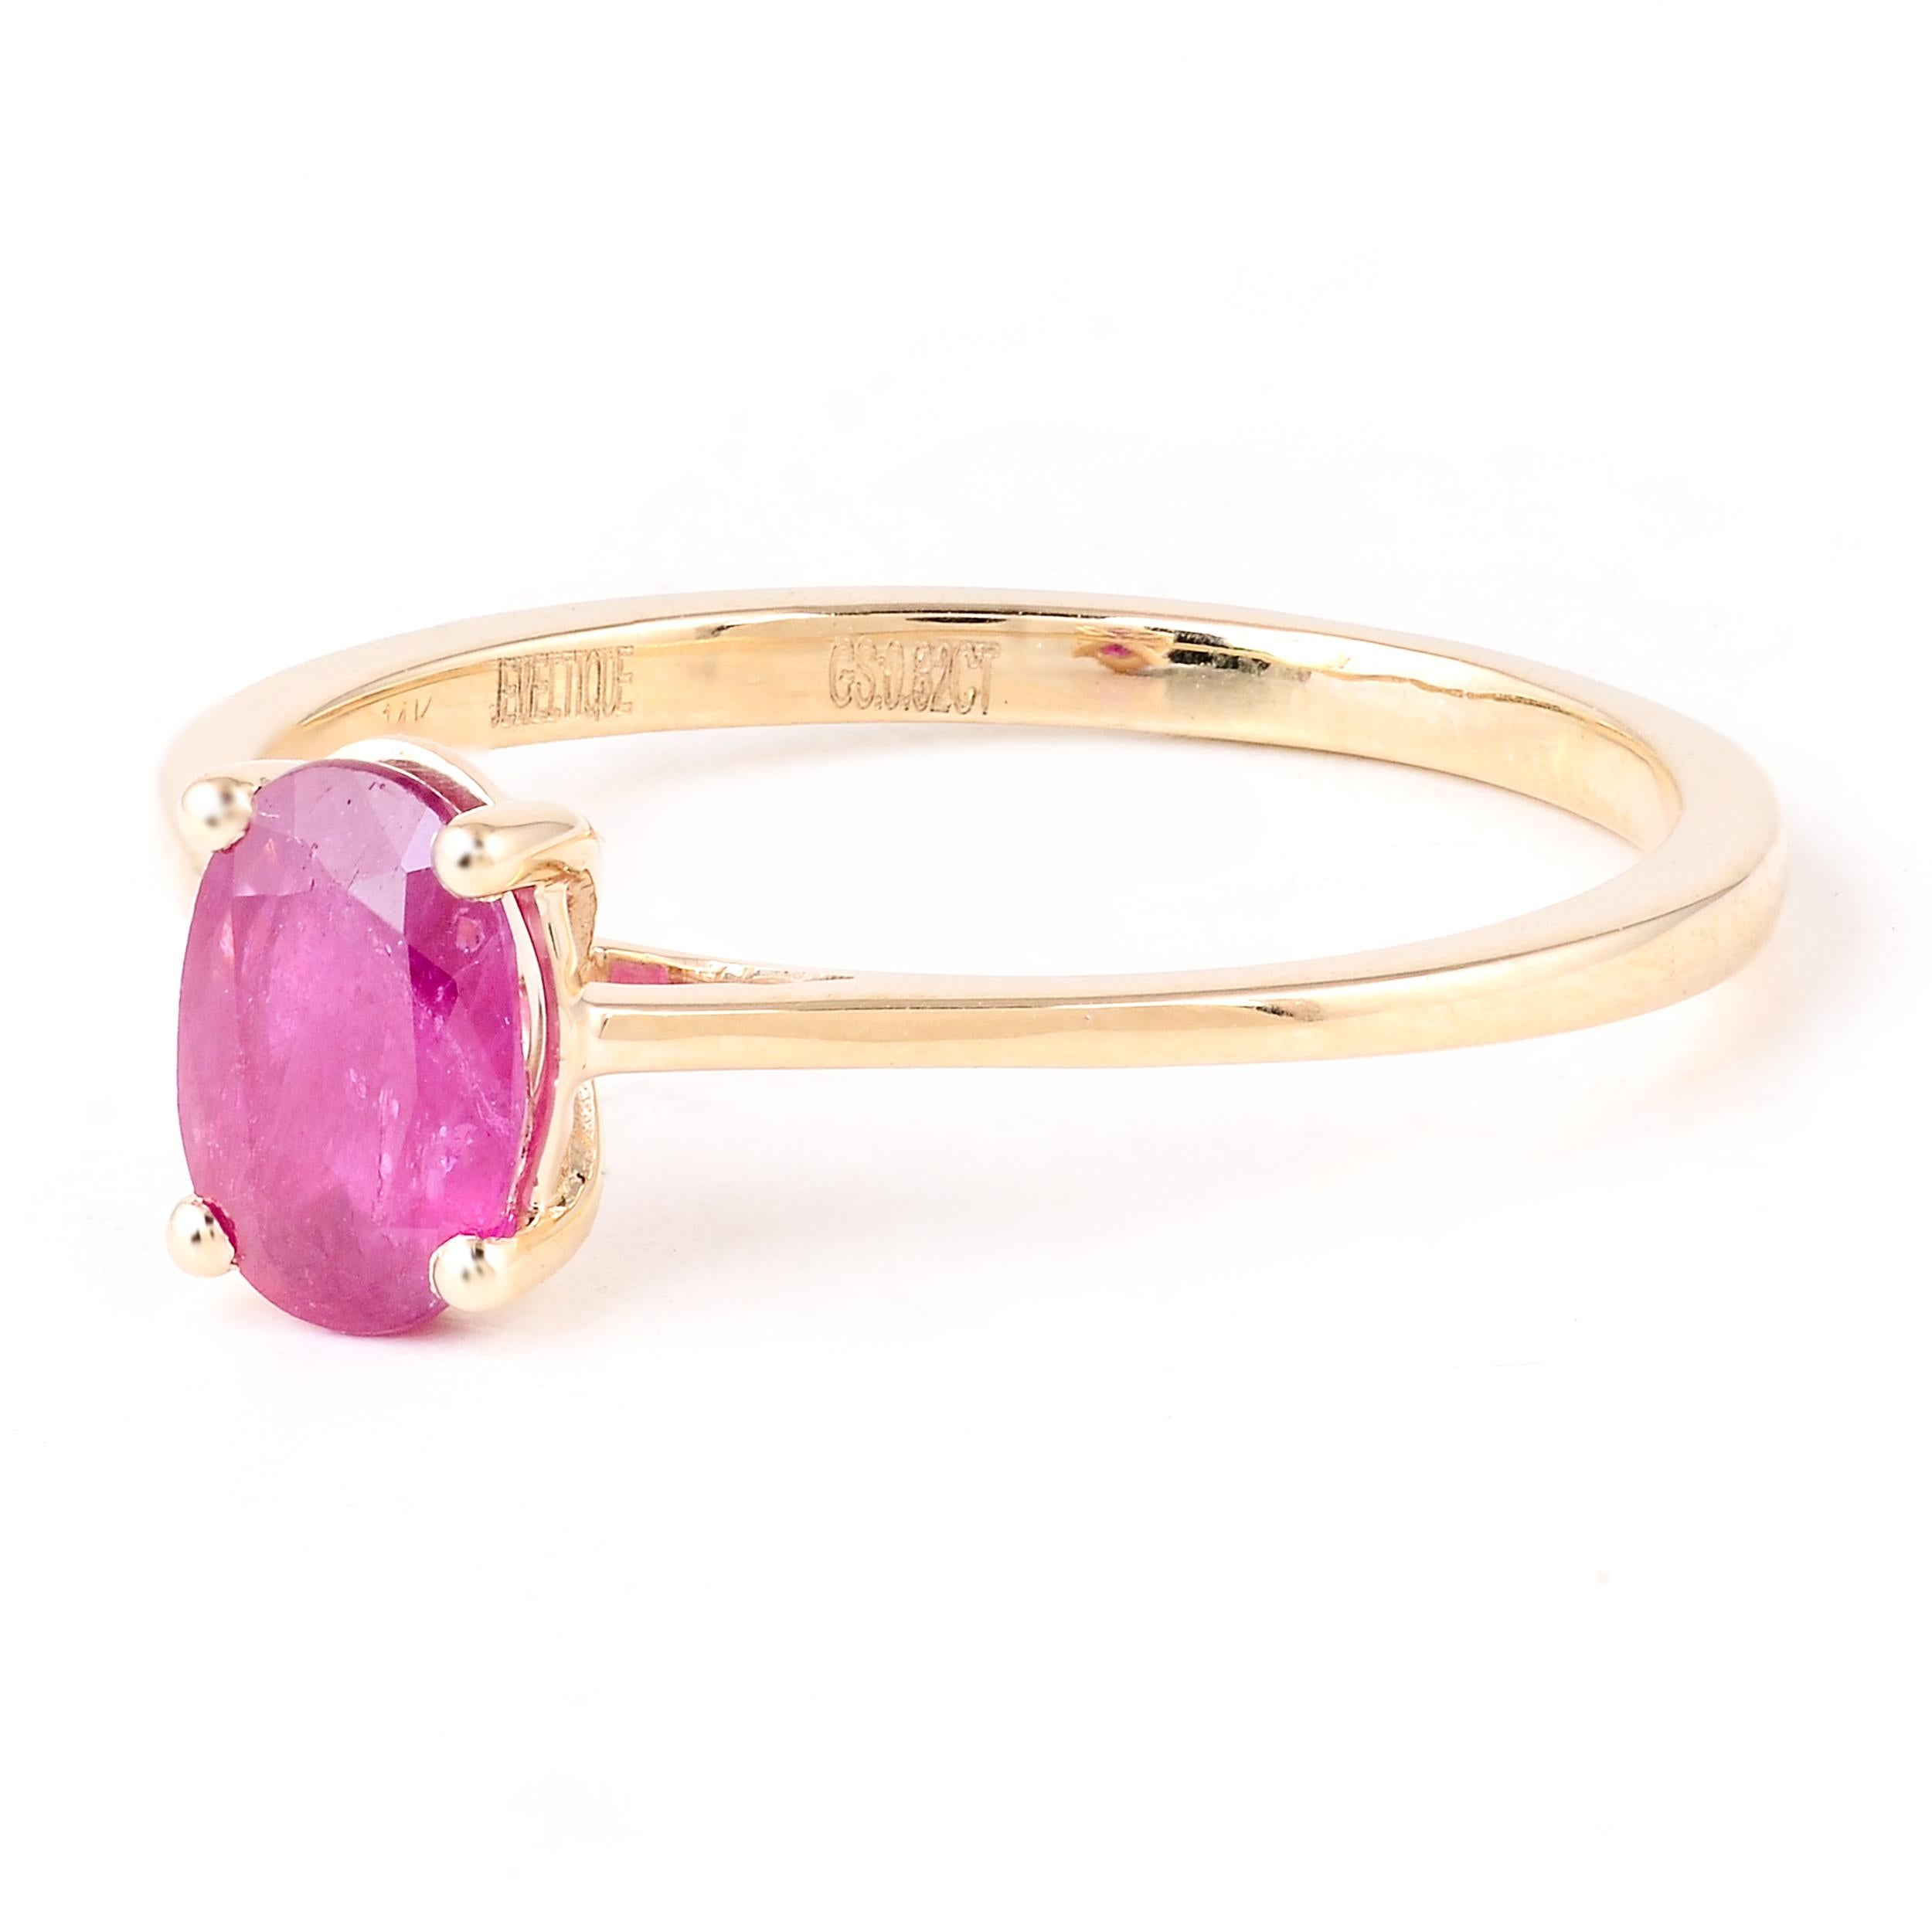 Women's Elegant 14K Ruby Cocktail Ring, Size 6.75 - Luxury Statement Jewelry Piece For Sale